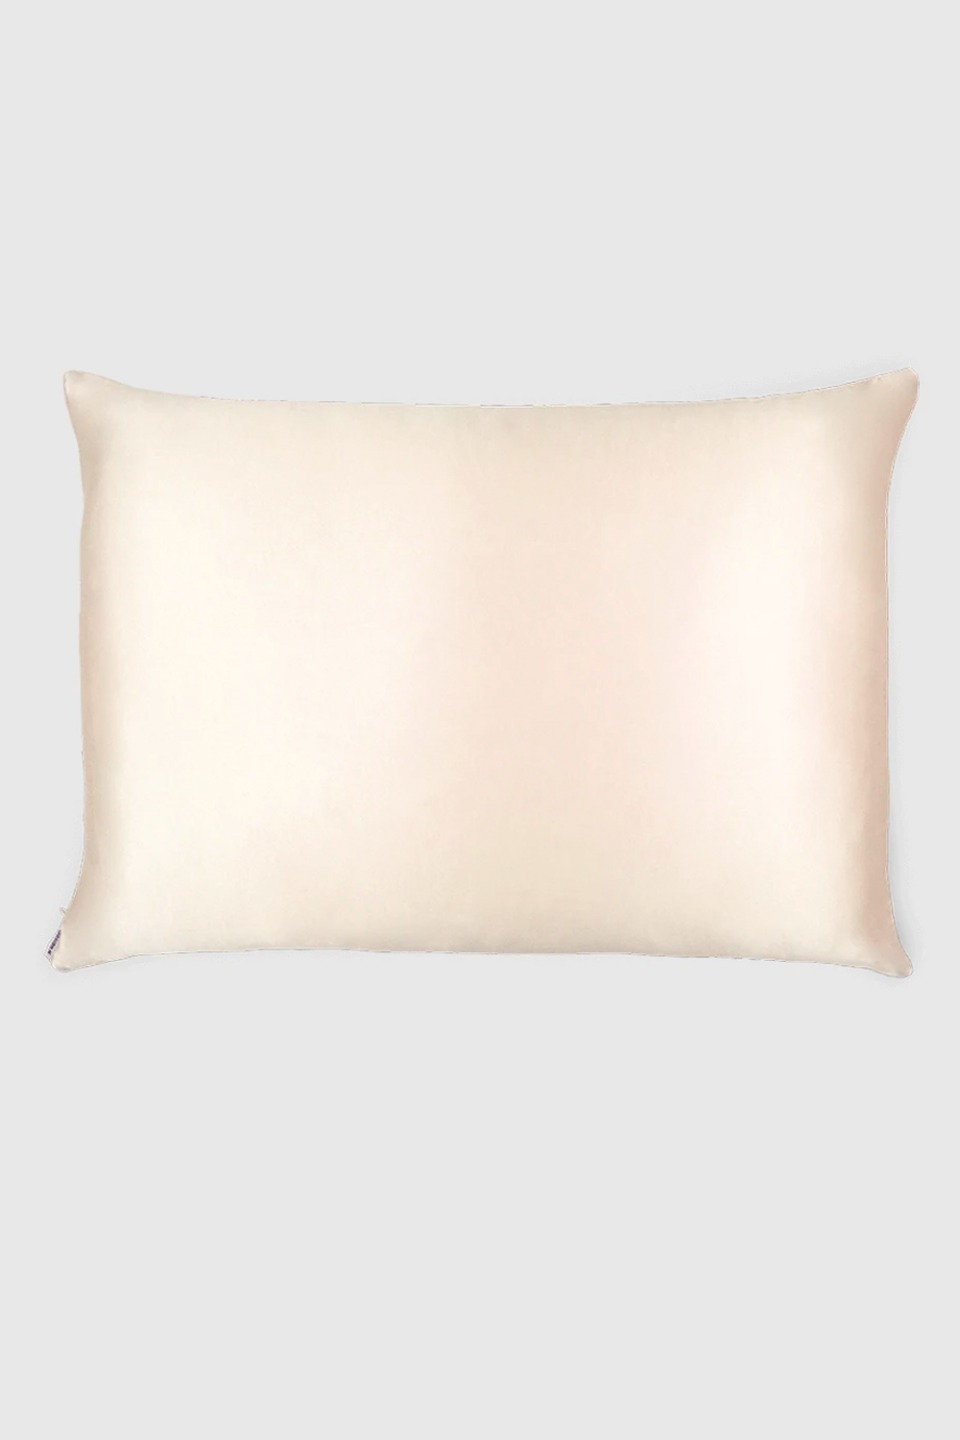 19) Shhh Silk Nude Silk Pillowcase Zippered